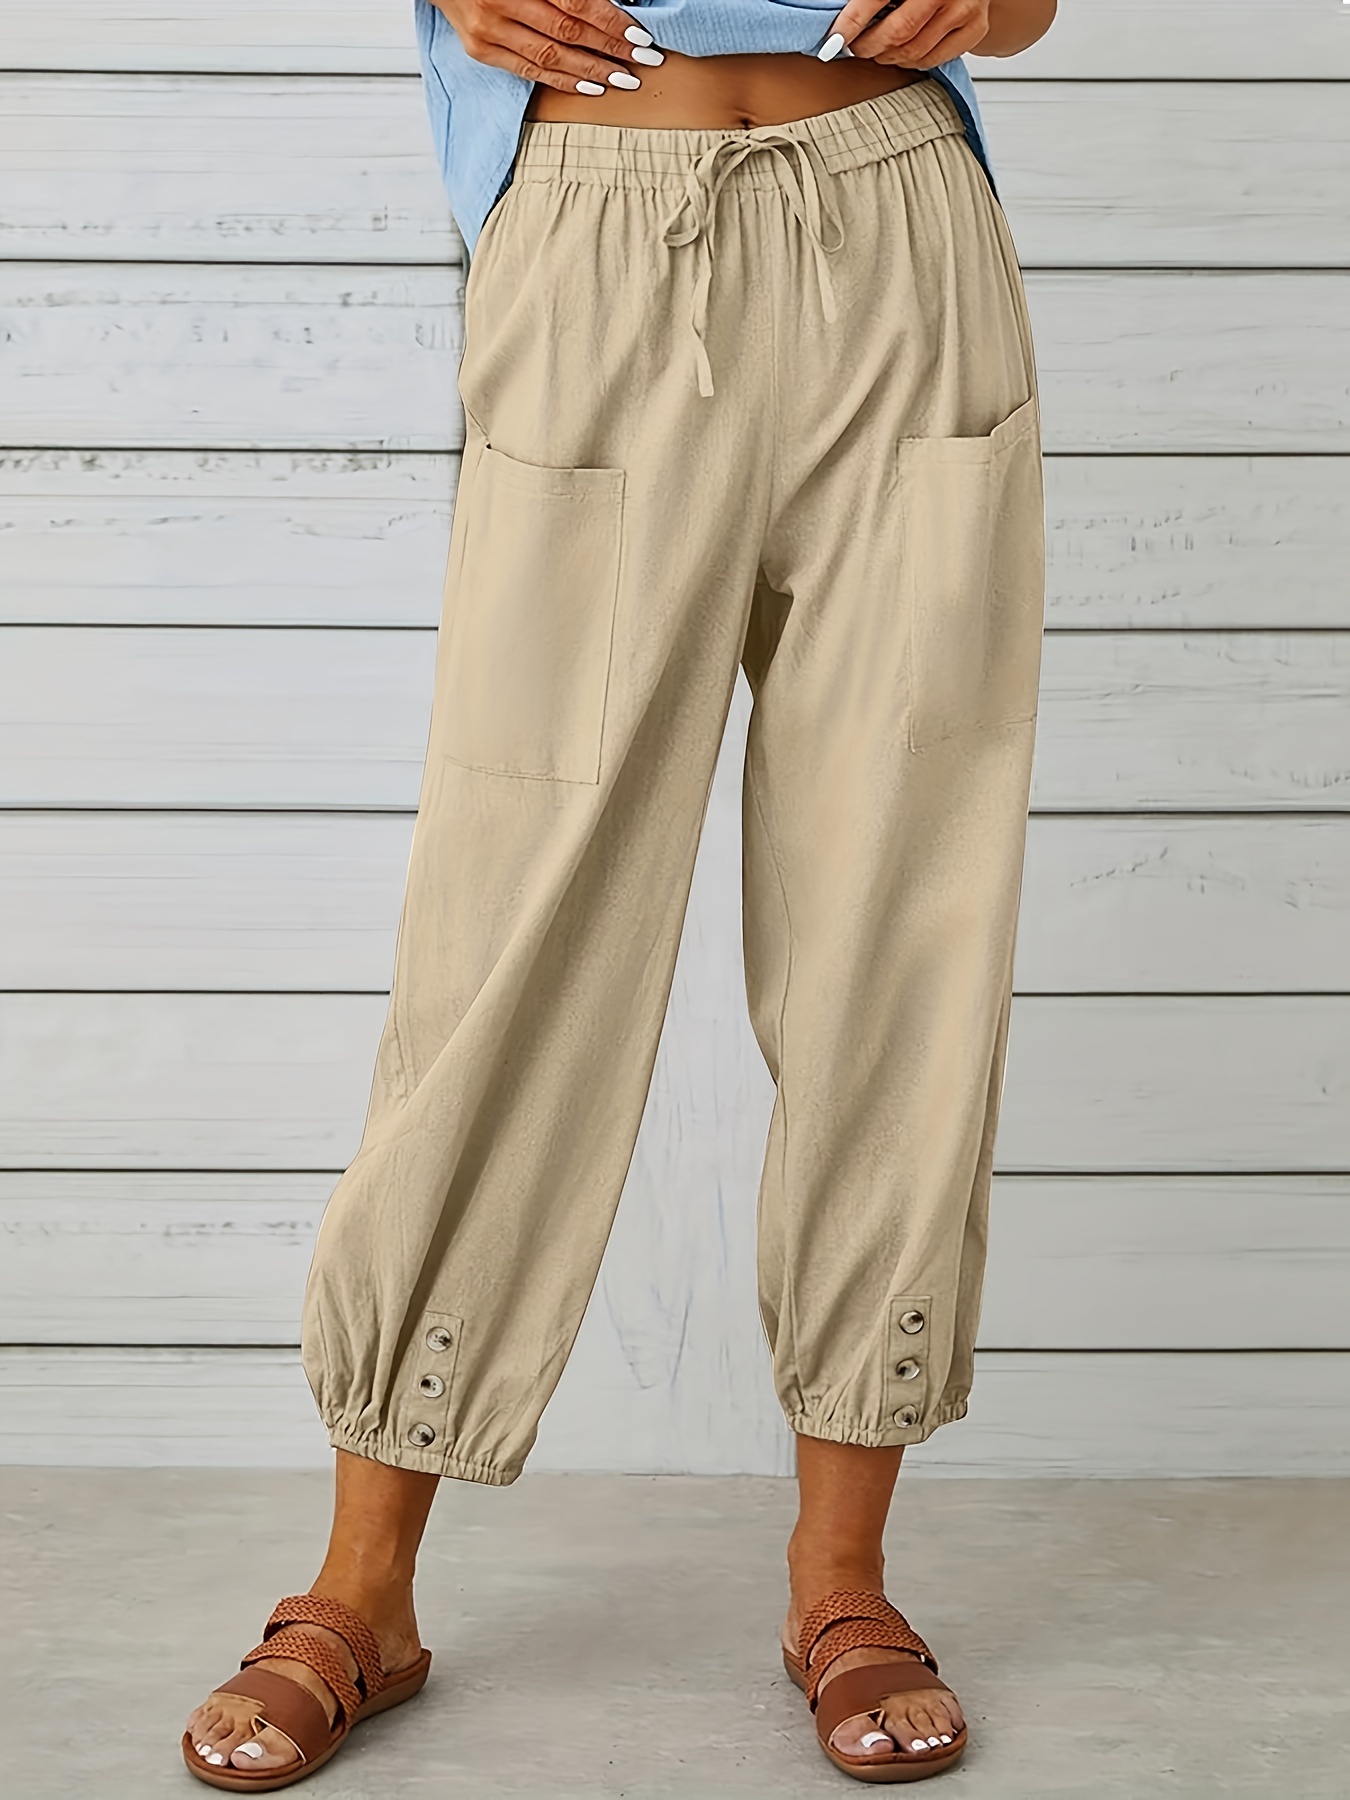 Women's High Waist Style Loose Pants Drawstring Capri Pants with